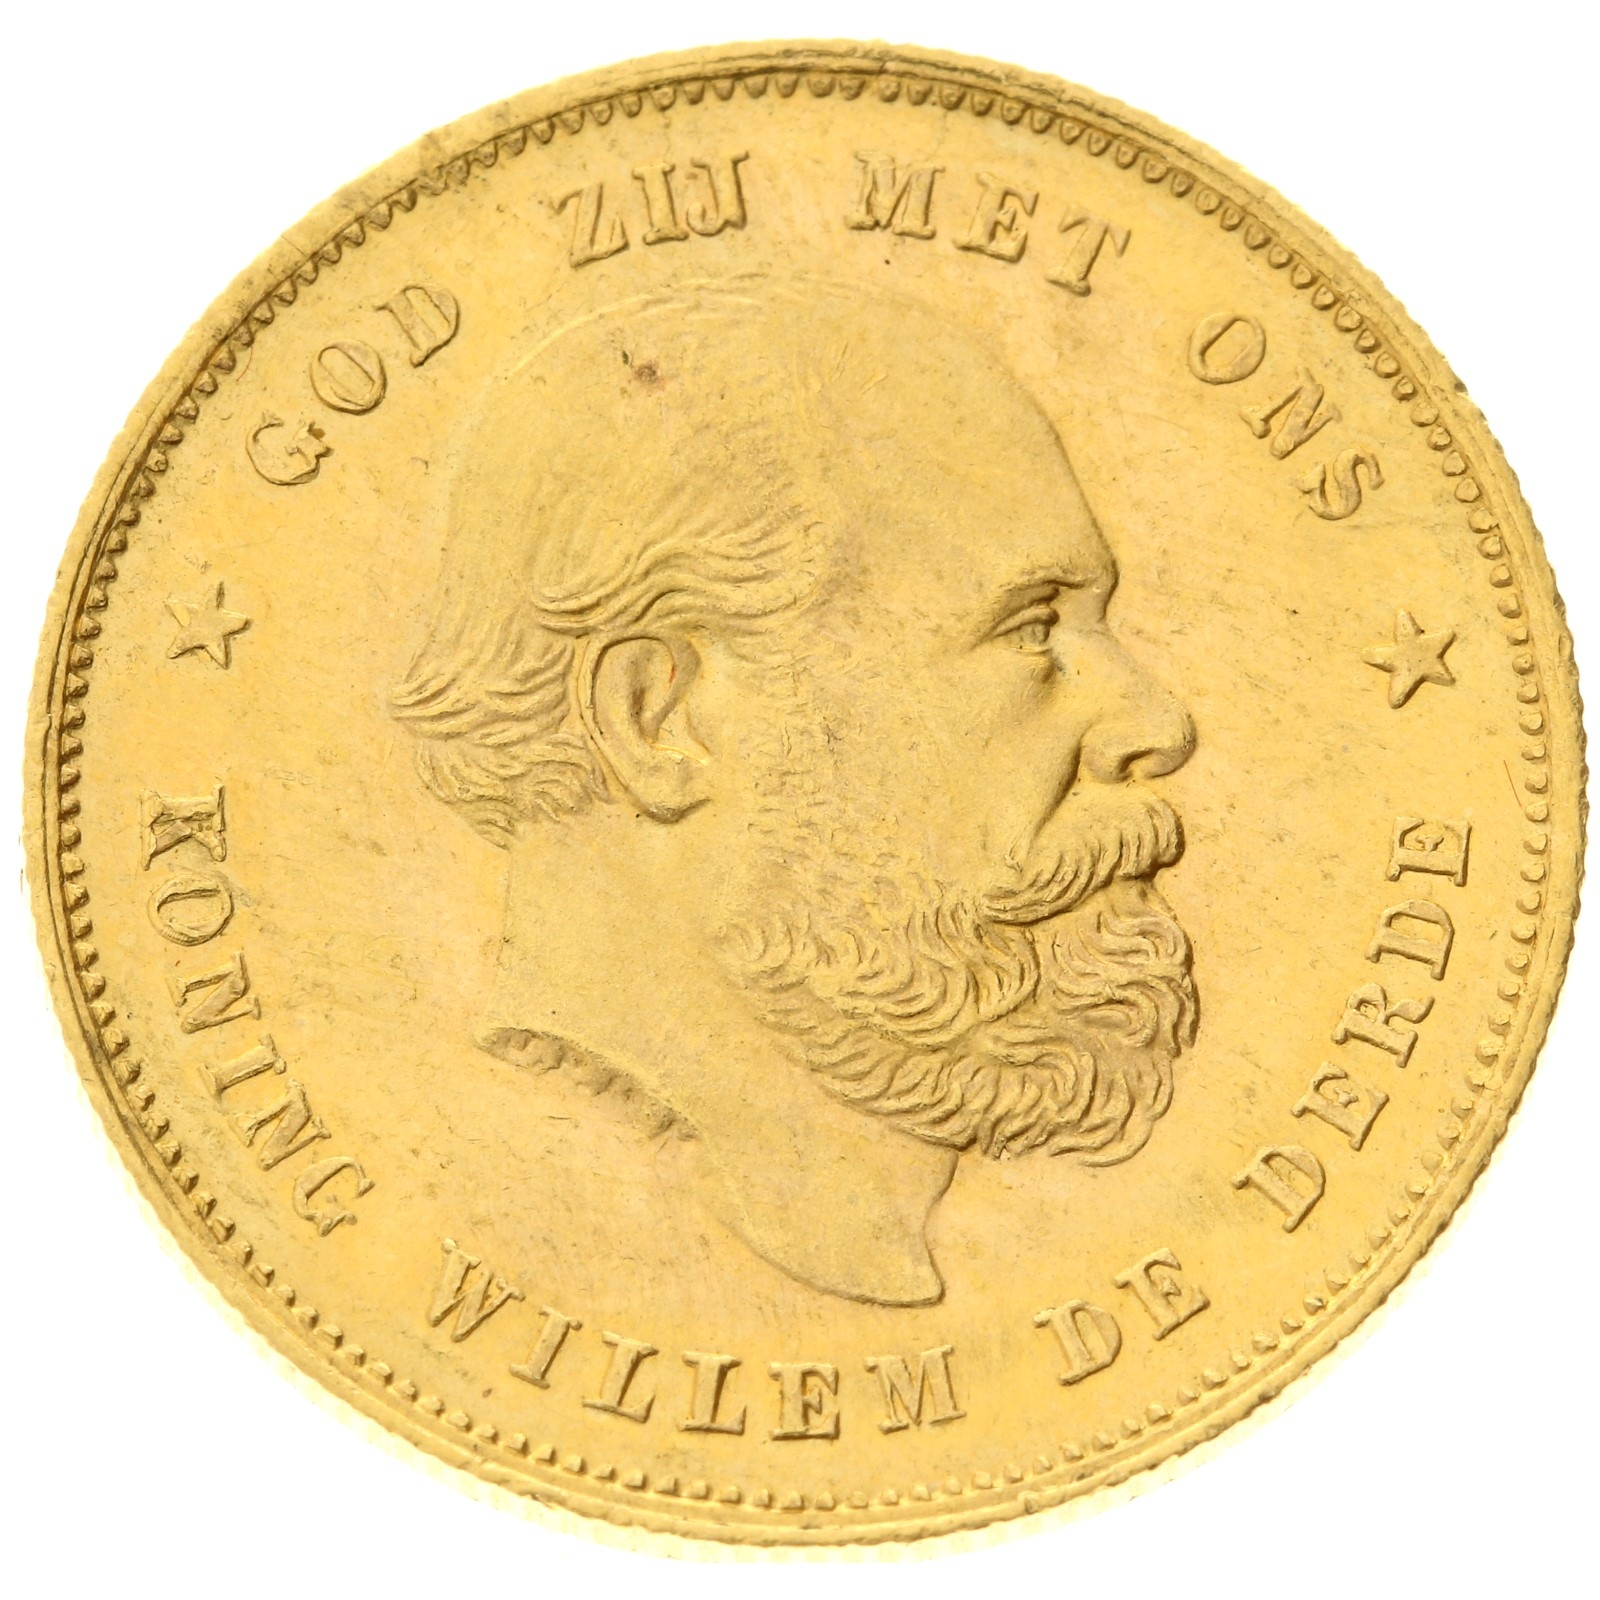 Netherlands - Willem III - 10 gulden - 1879